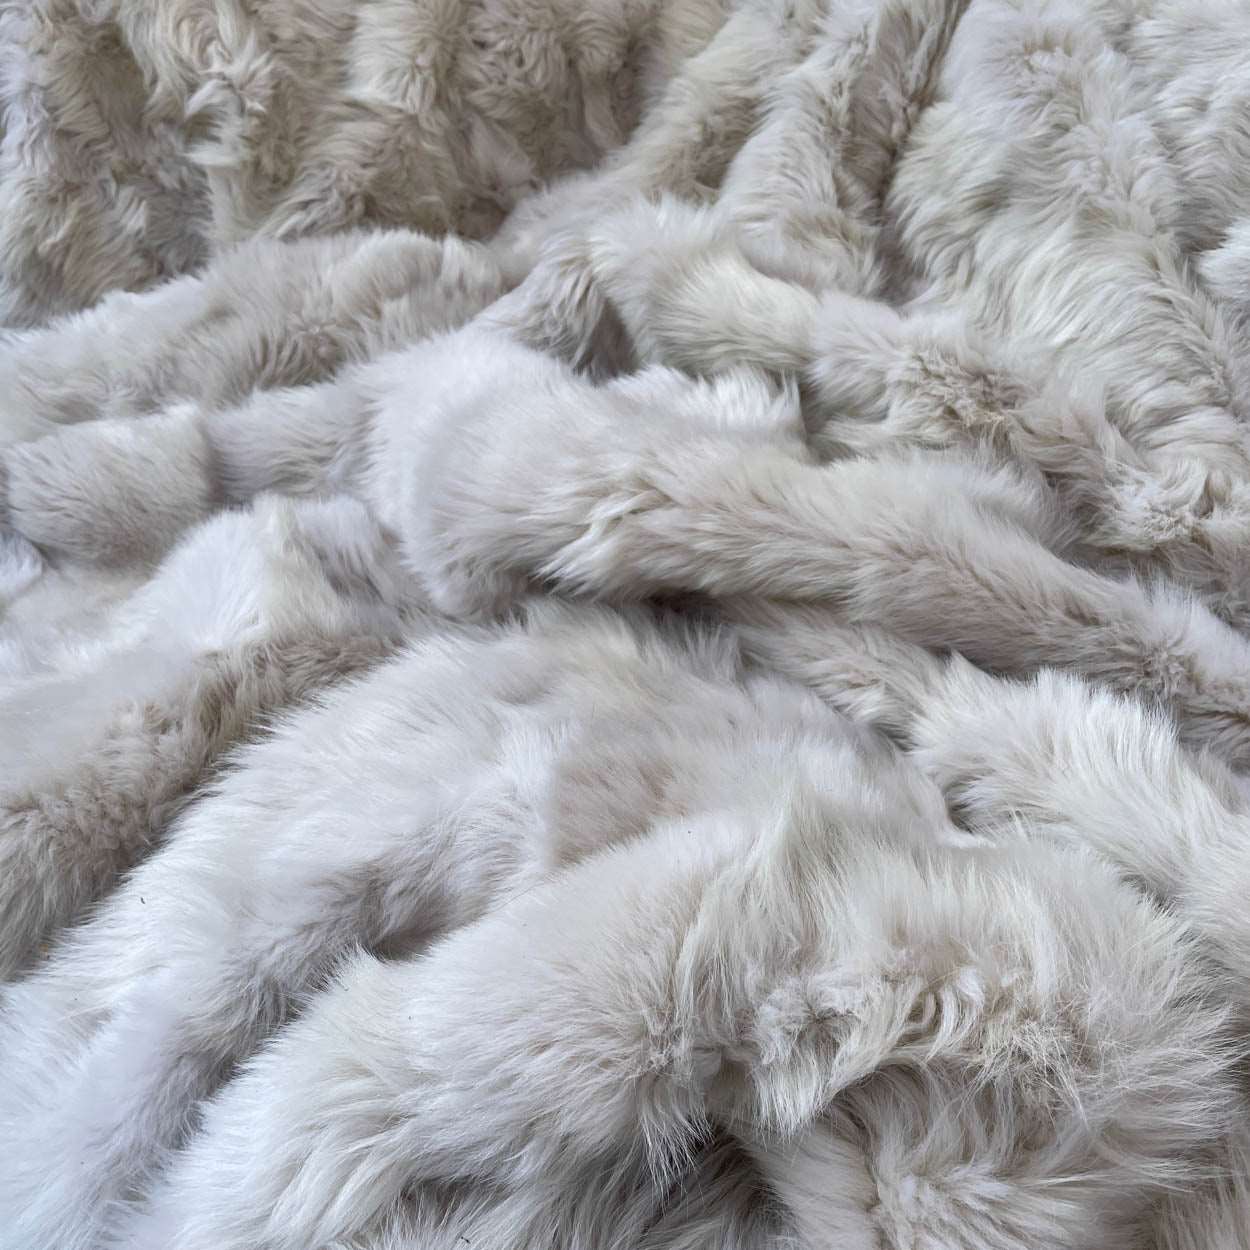 Clotted Cream Shearling Throw | Sheepskin Blanket | Rug | JUB2201 - Wildash London